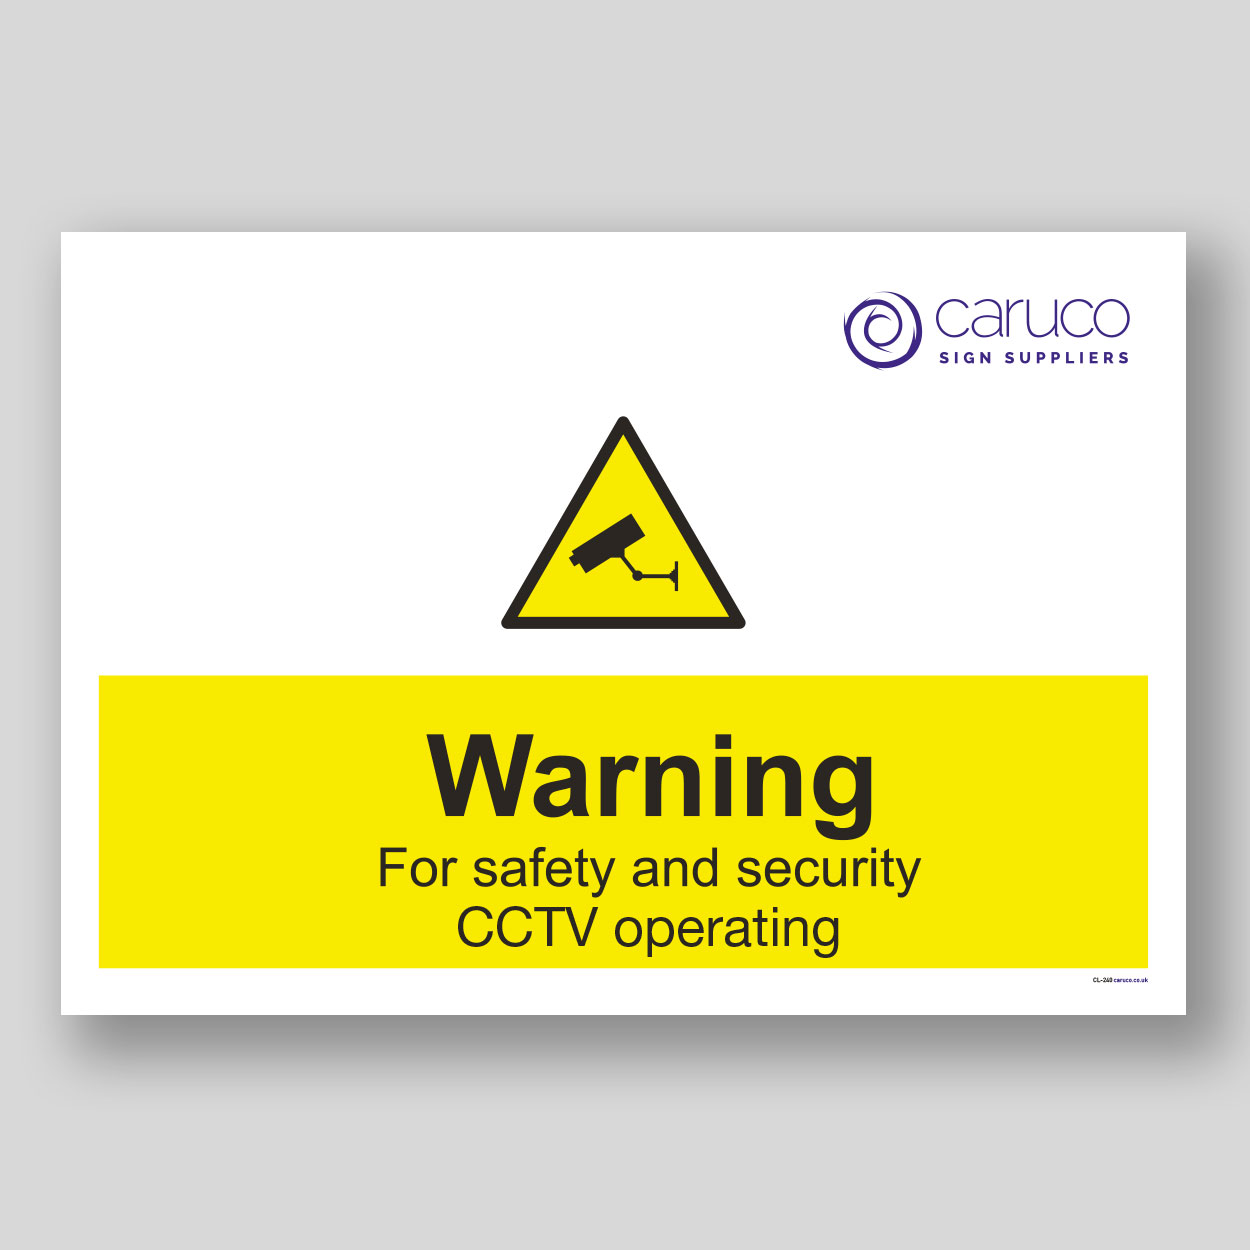 CL-240 Warning - cctv operating